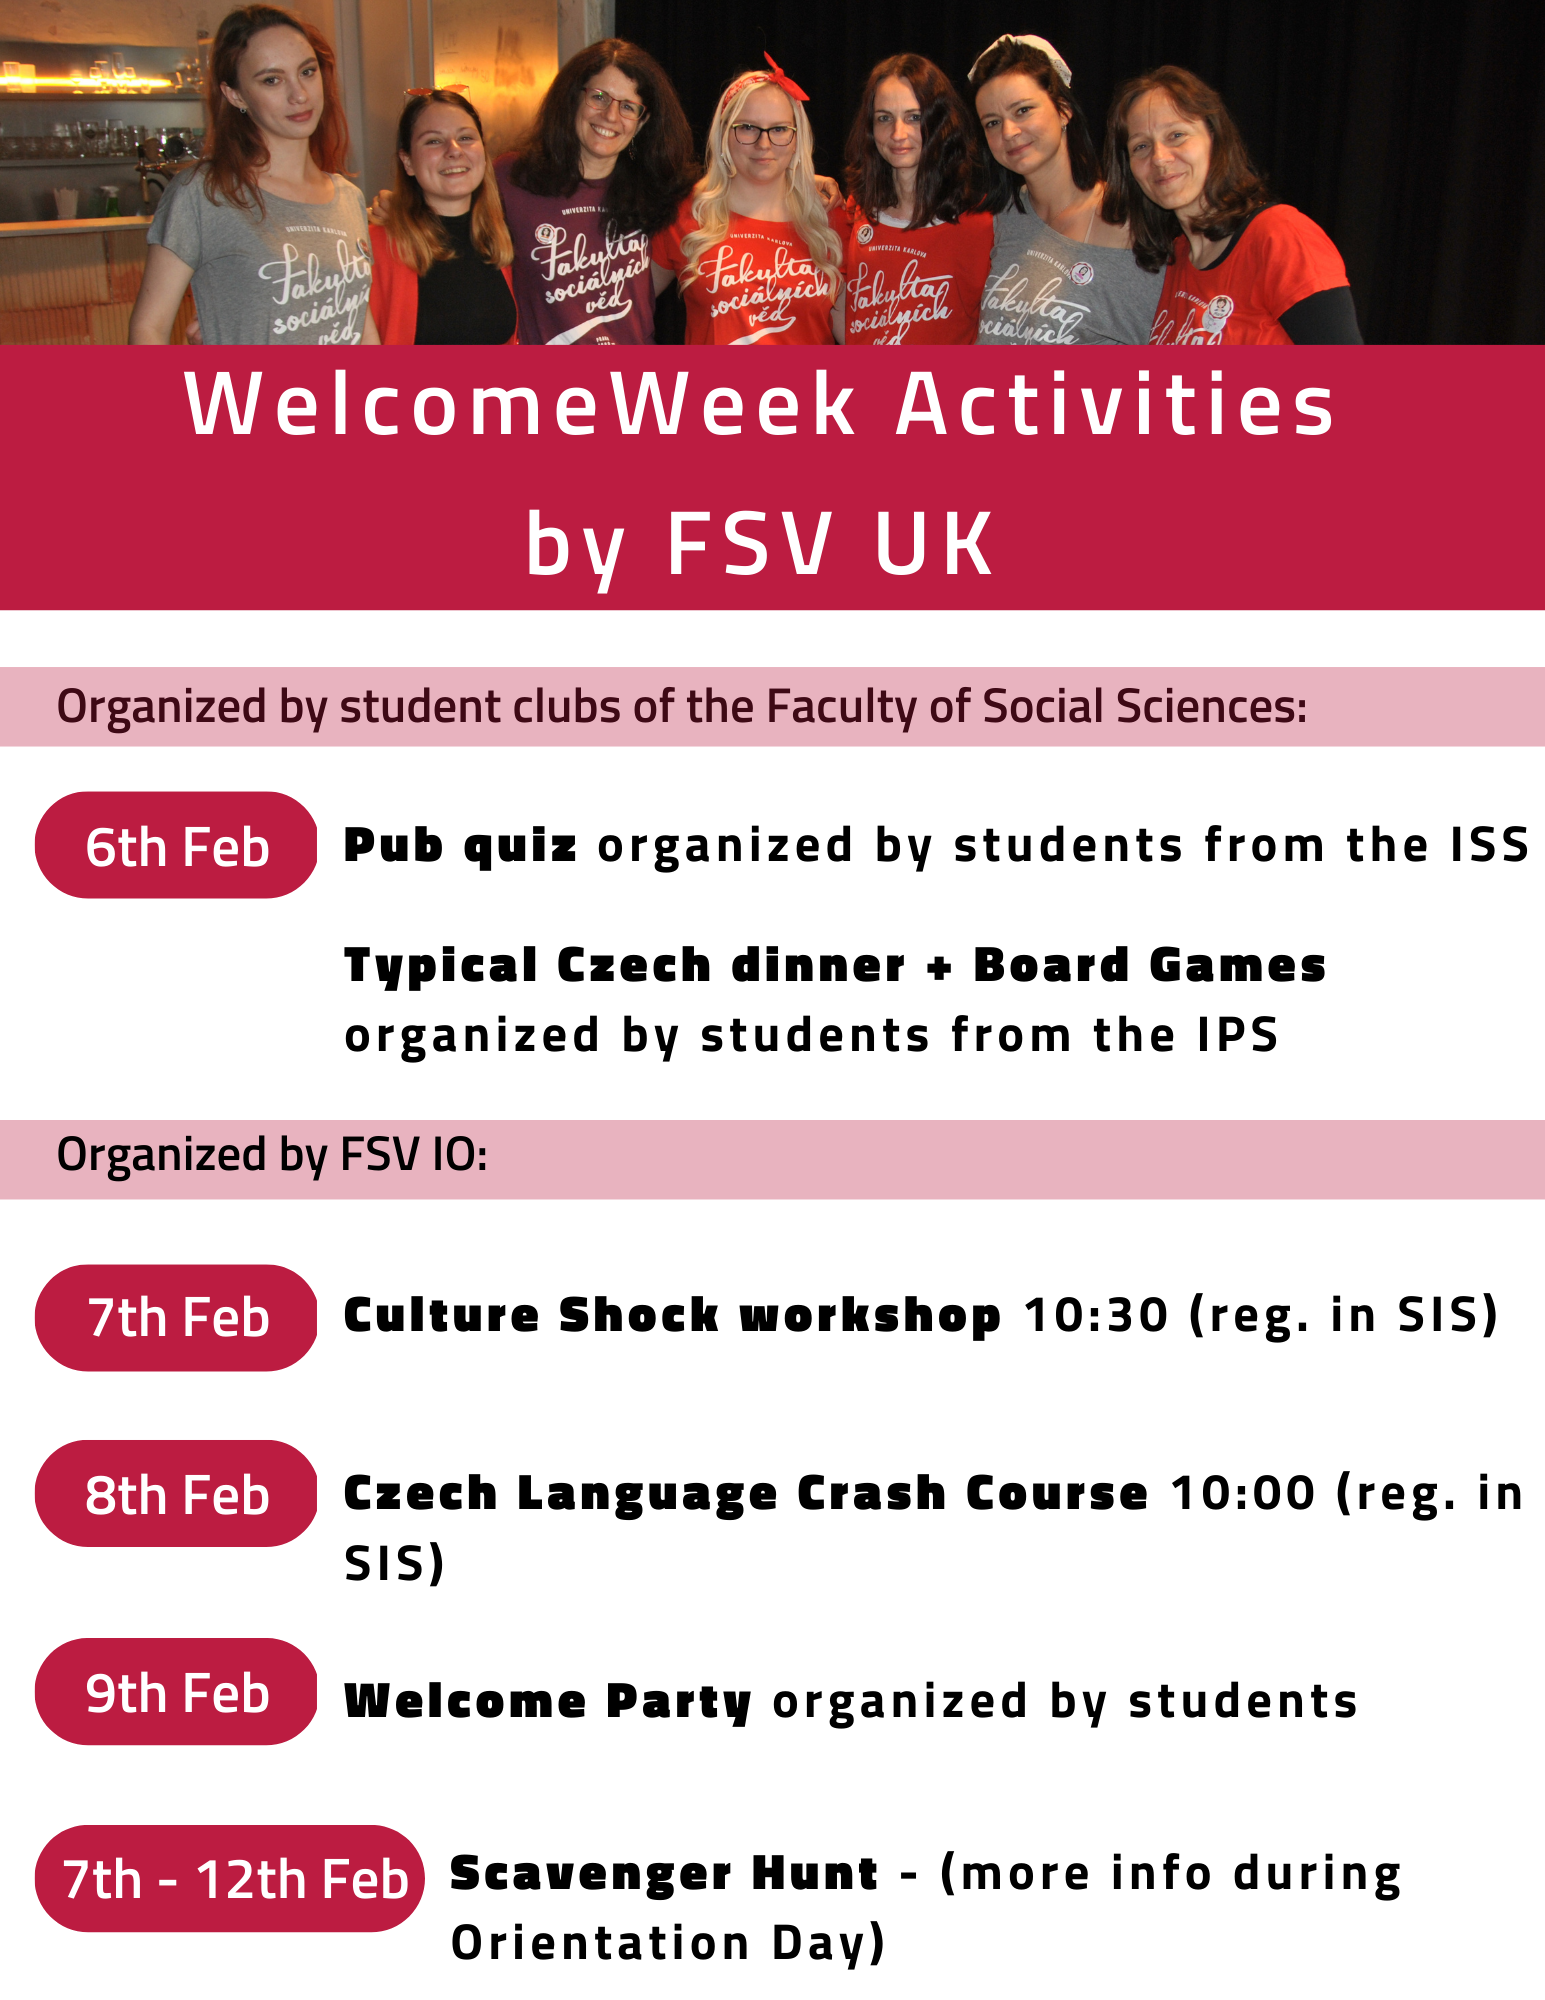 Welcome week activities by FSV UK 